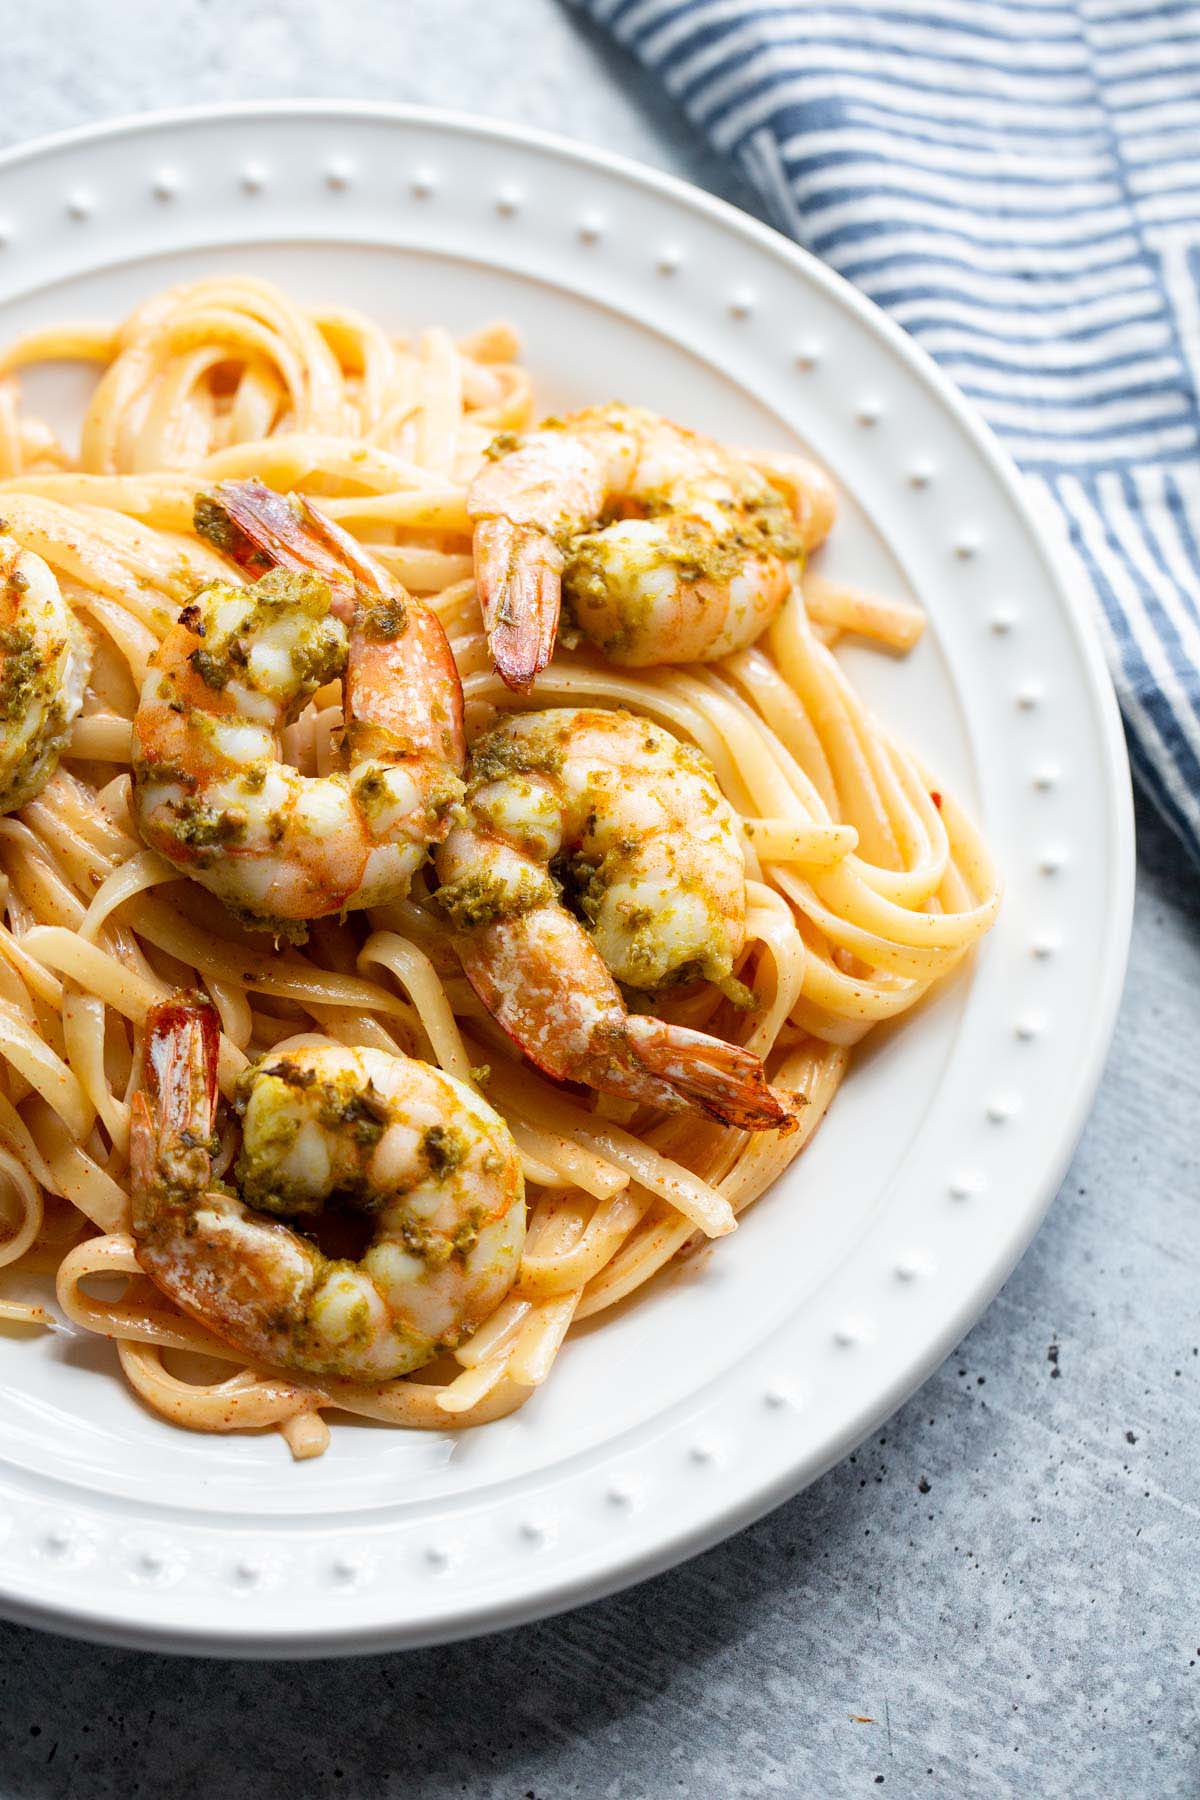 Pesto shrimp with pasta.